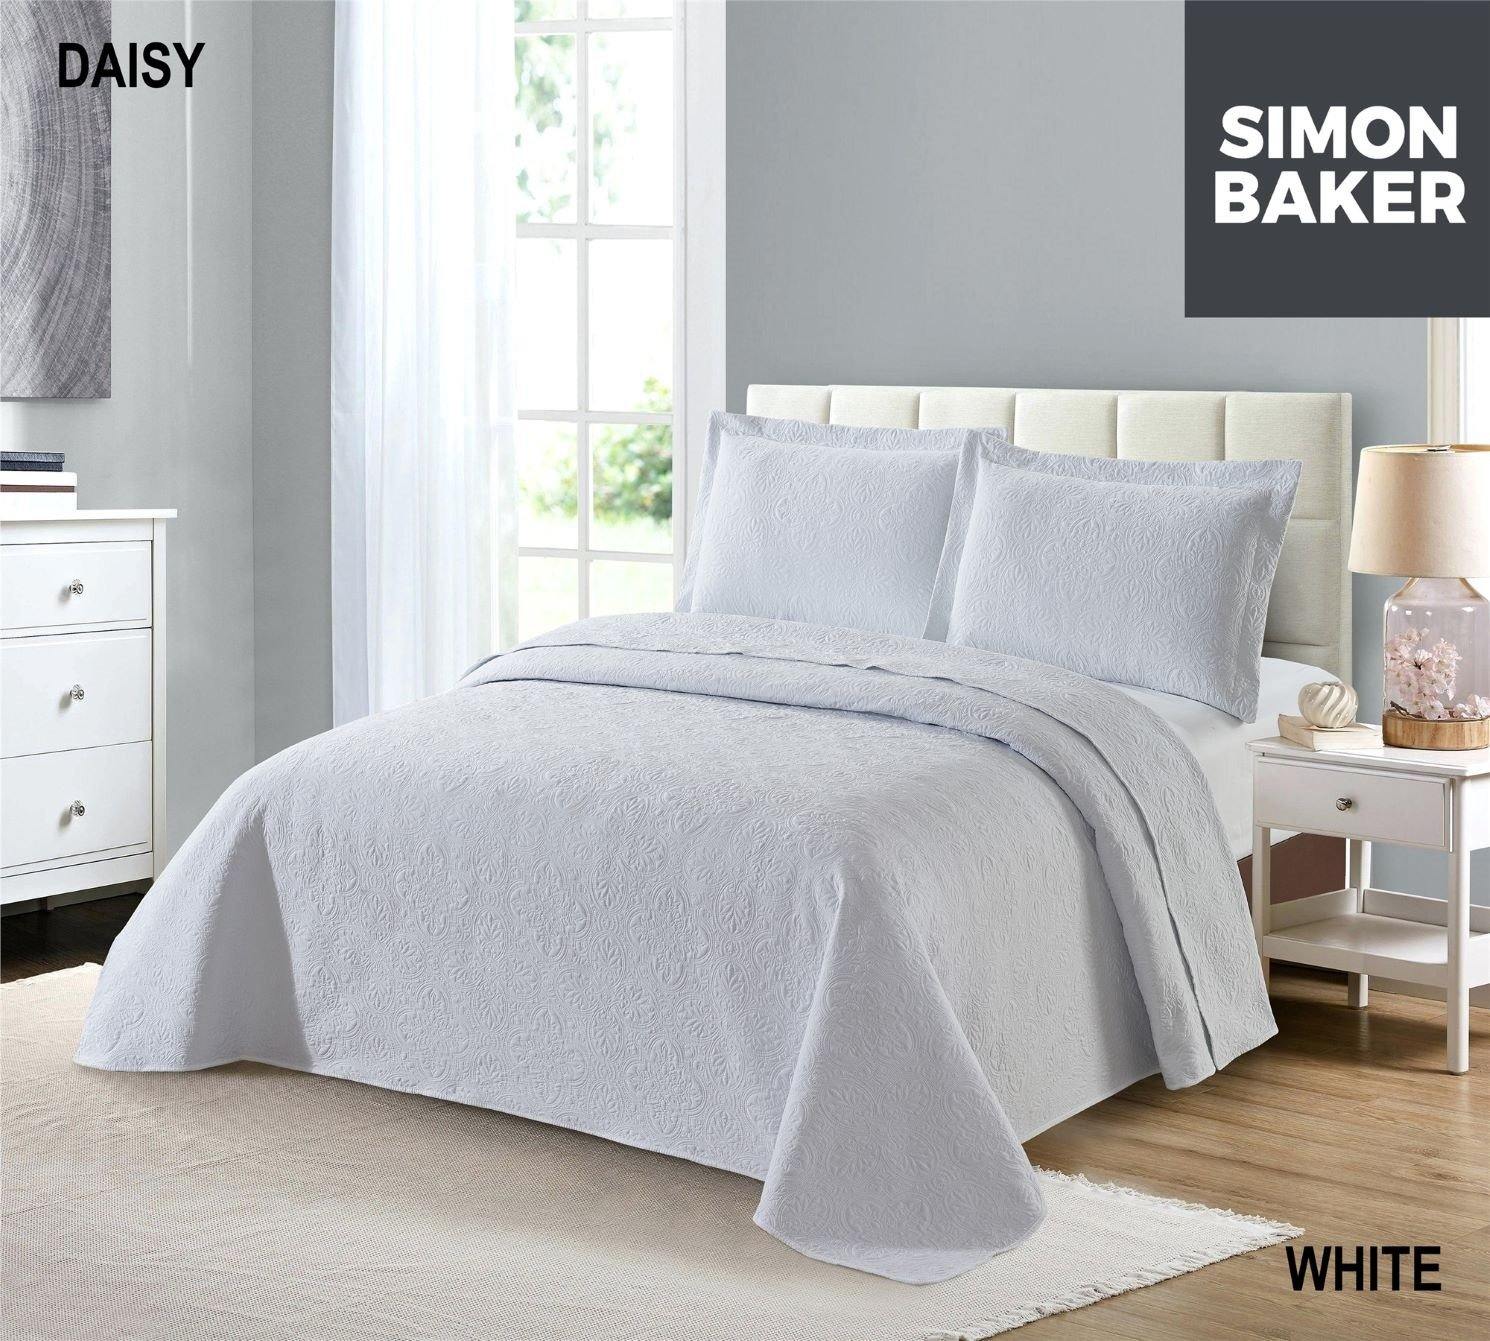 Simon Baker | Daisy Bedspread White (Various Sizes)